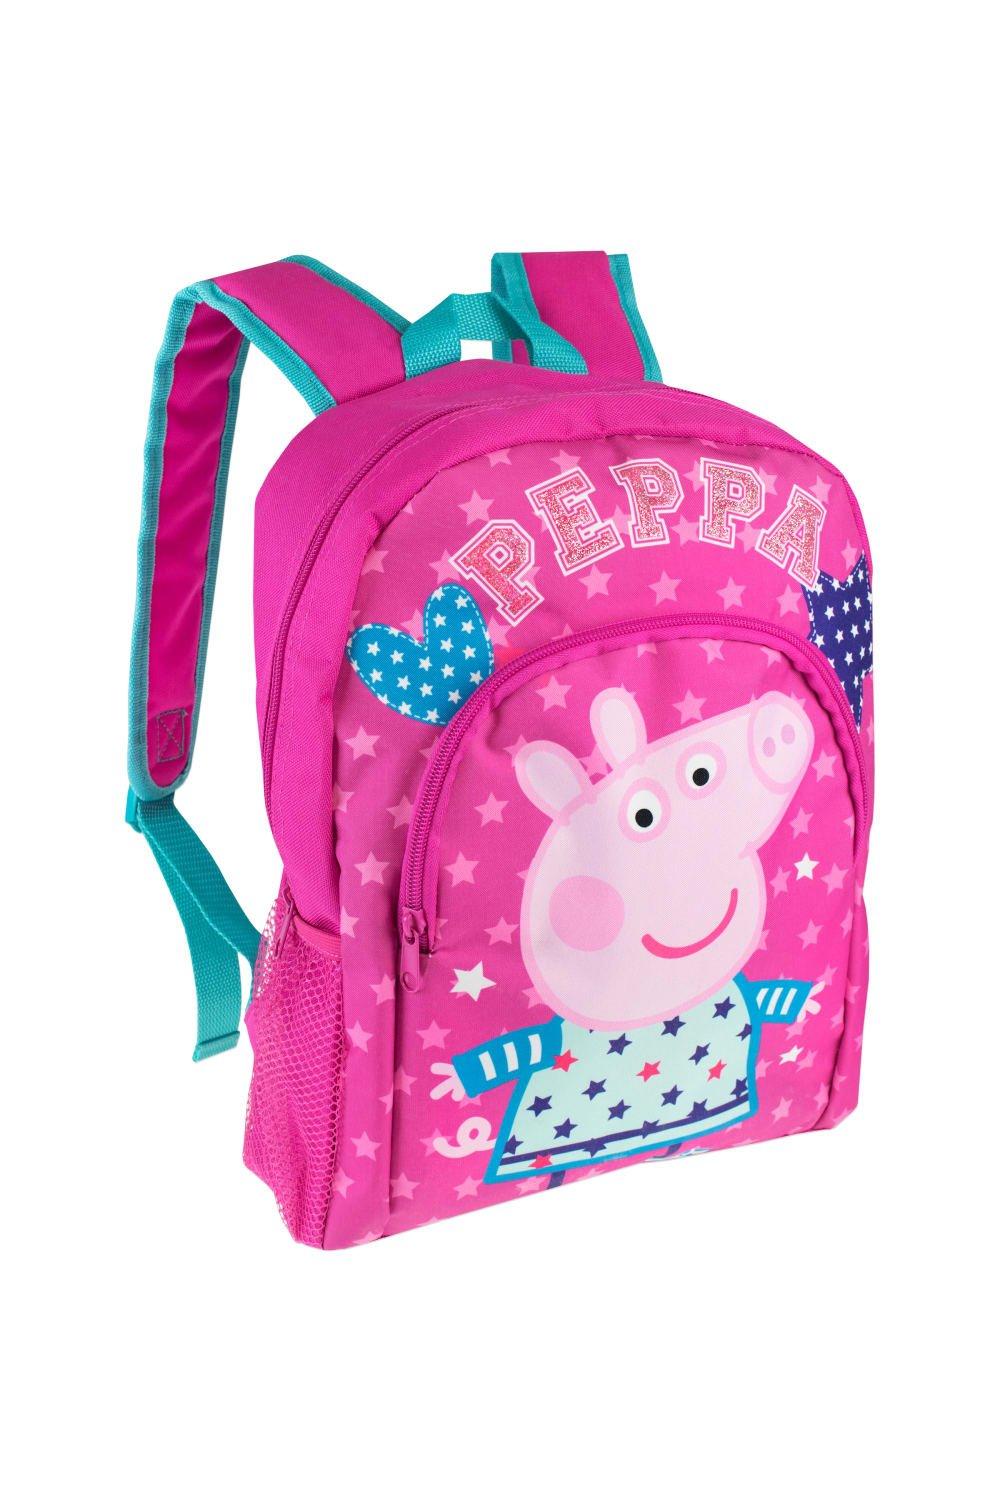 Детский рюкзак Peppa Pig, розовый подарочный канцелярский набор свинка пеппа pgia ua1 set1 33 x 26 x 6 см